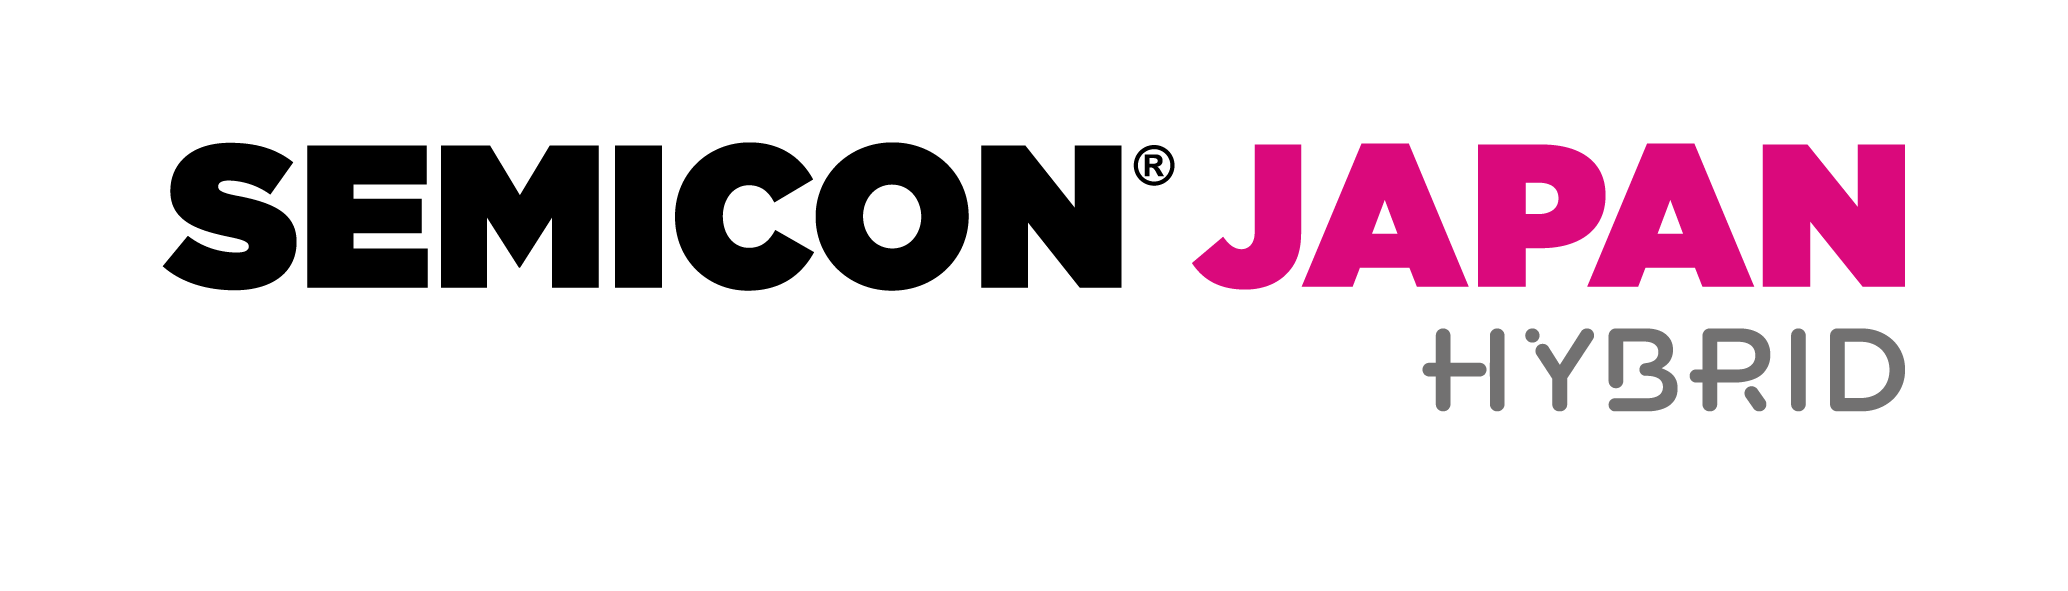 SEMICON JAPAN 2021 logo